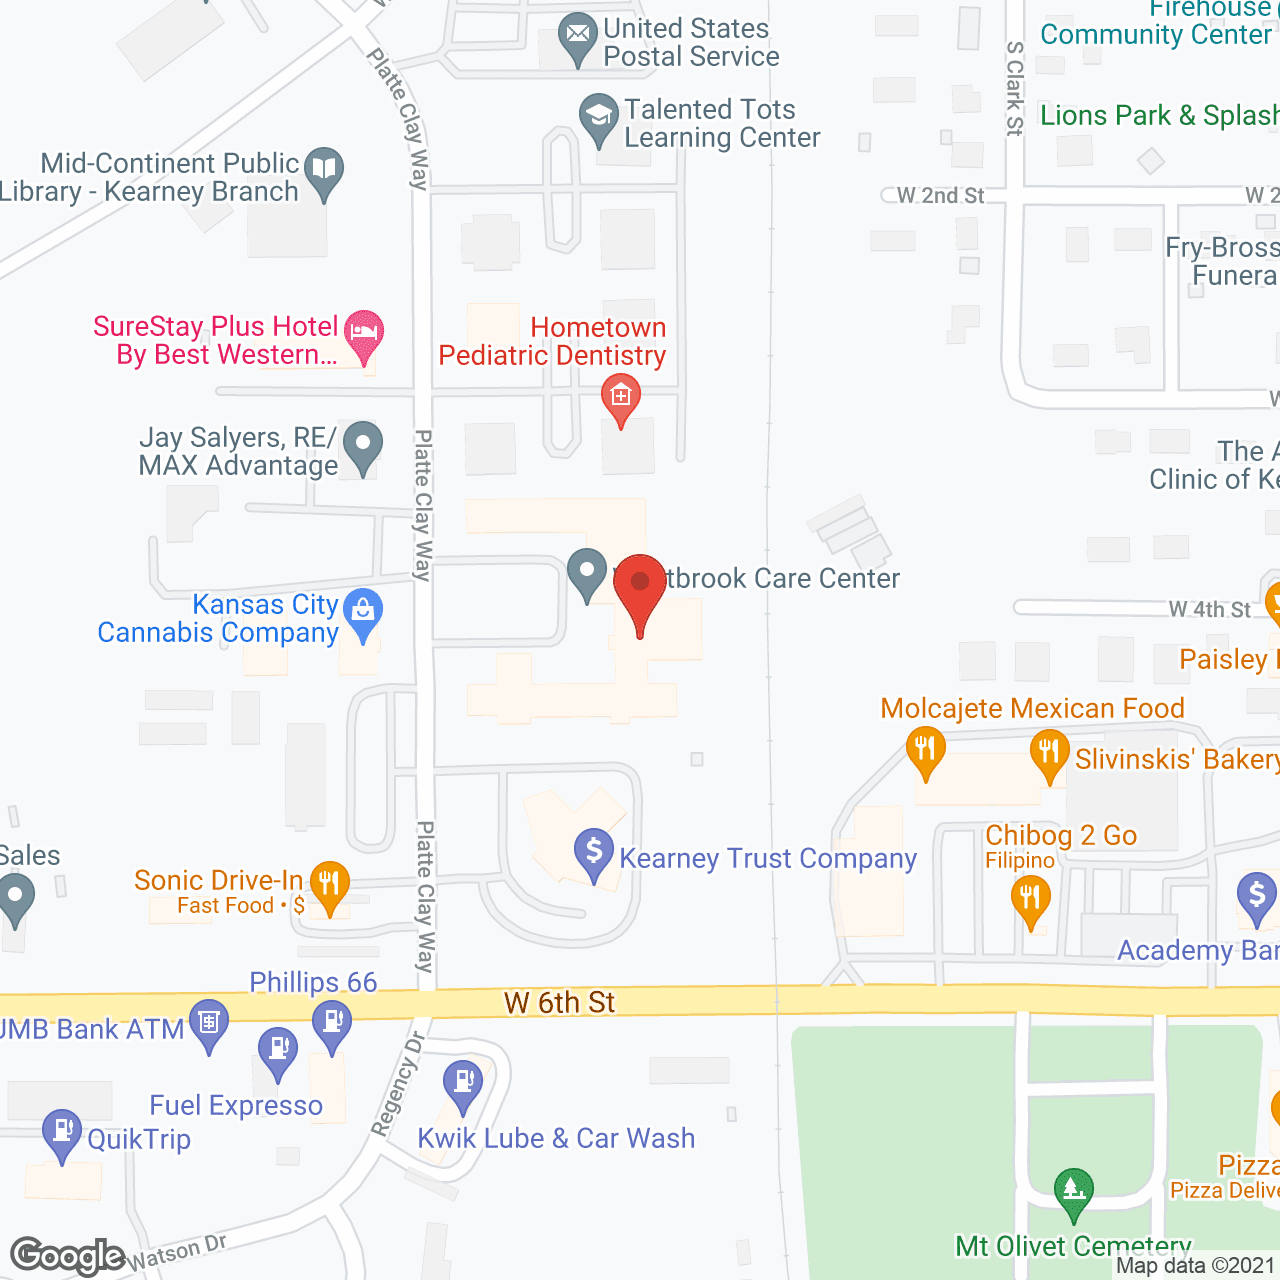 Westbrook Care Center, Inc in google map